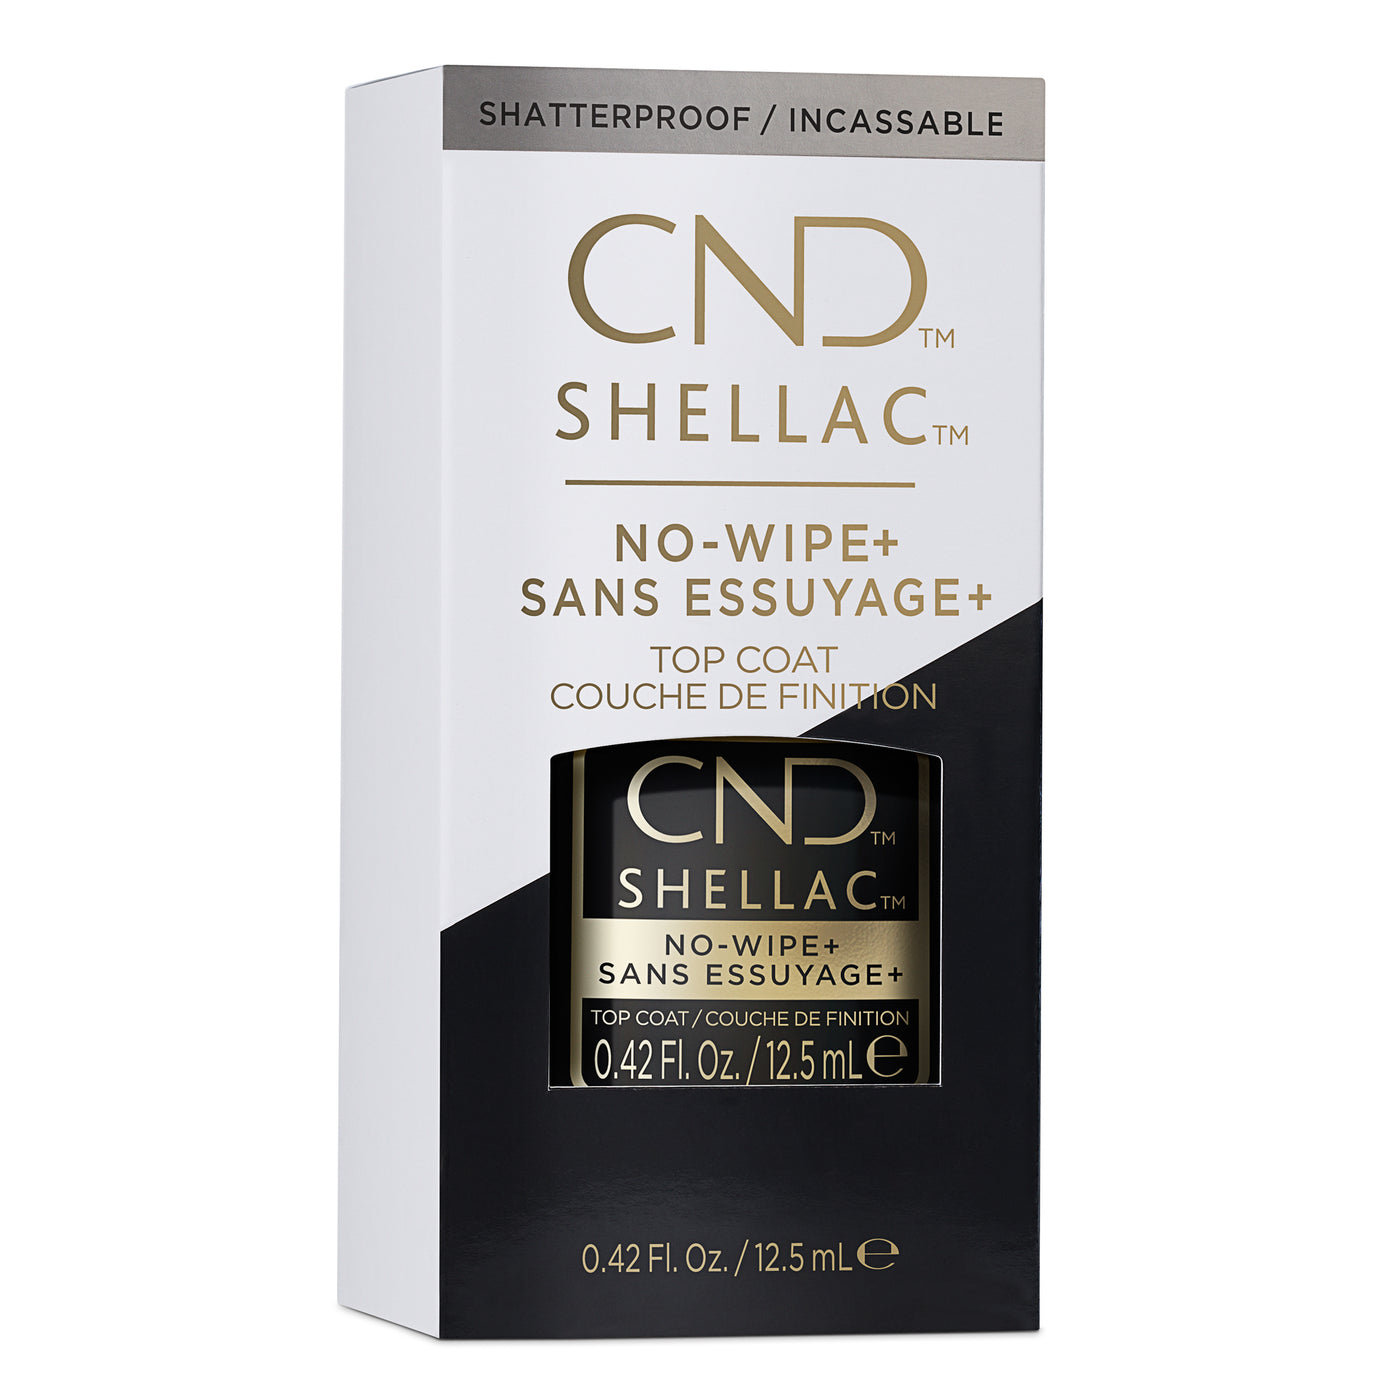 CND Shellac No-Wipe+ Top Coat (12.5ml) packaging